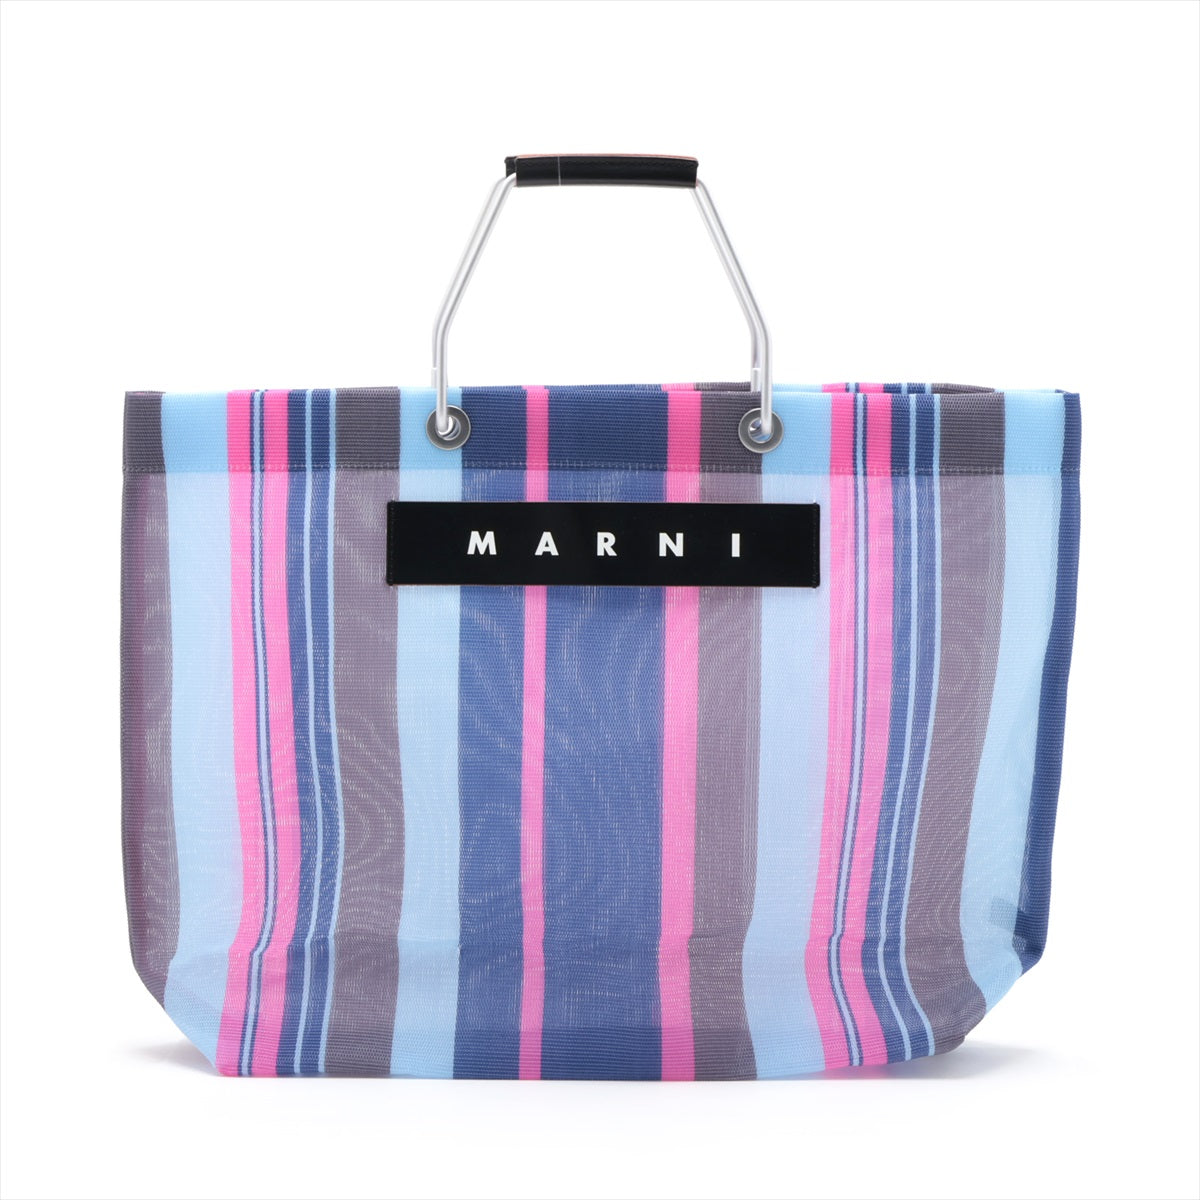 Marni Flower Cafe picnics Vinyl Tote Bag Multicolor